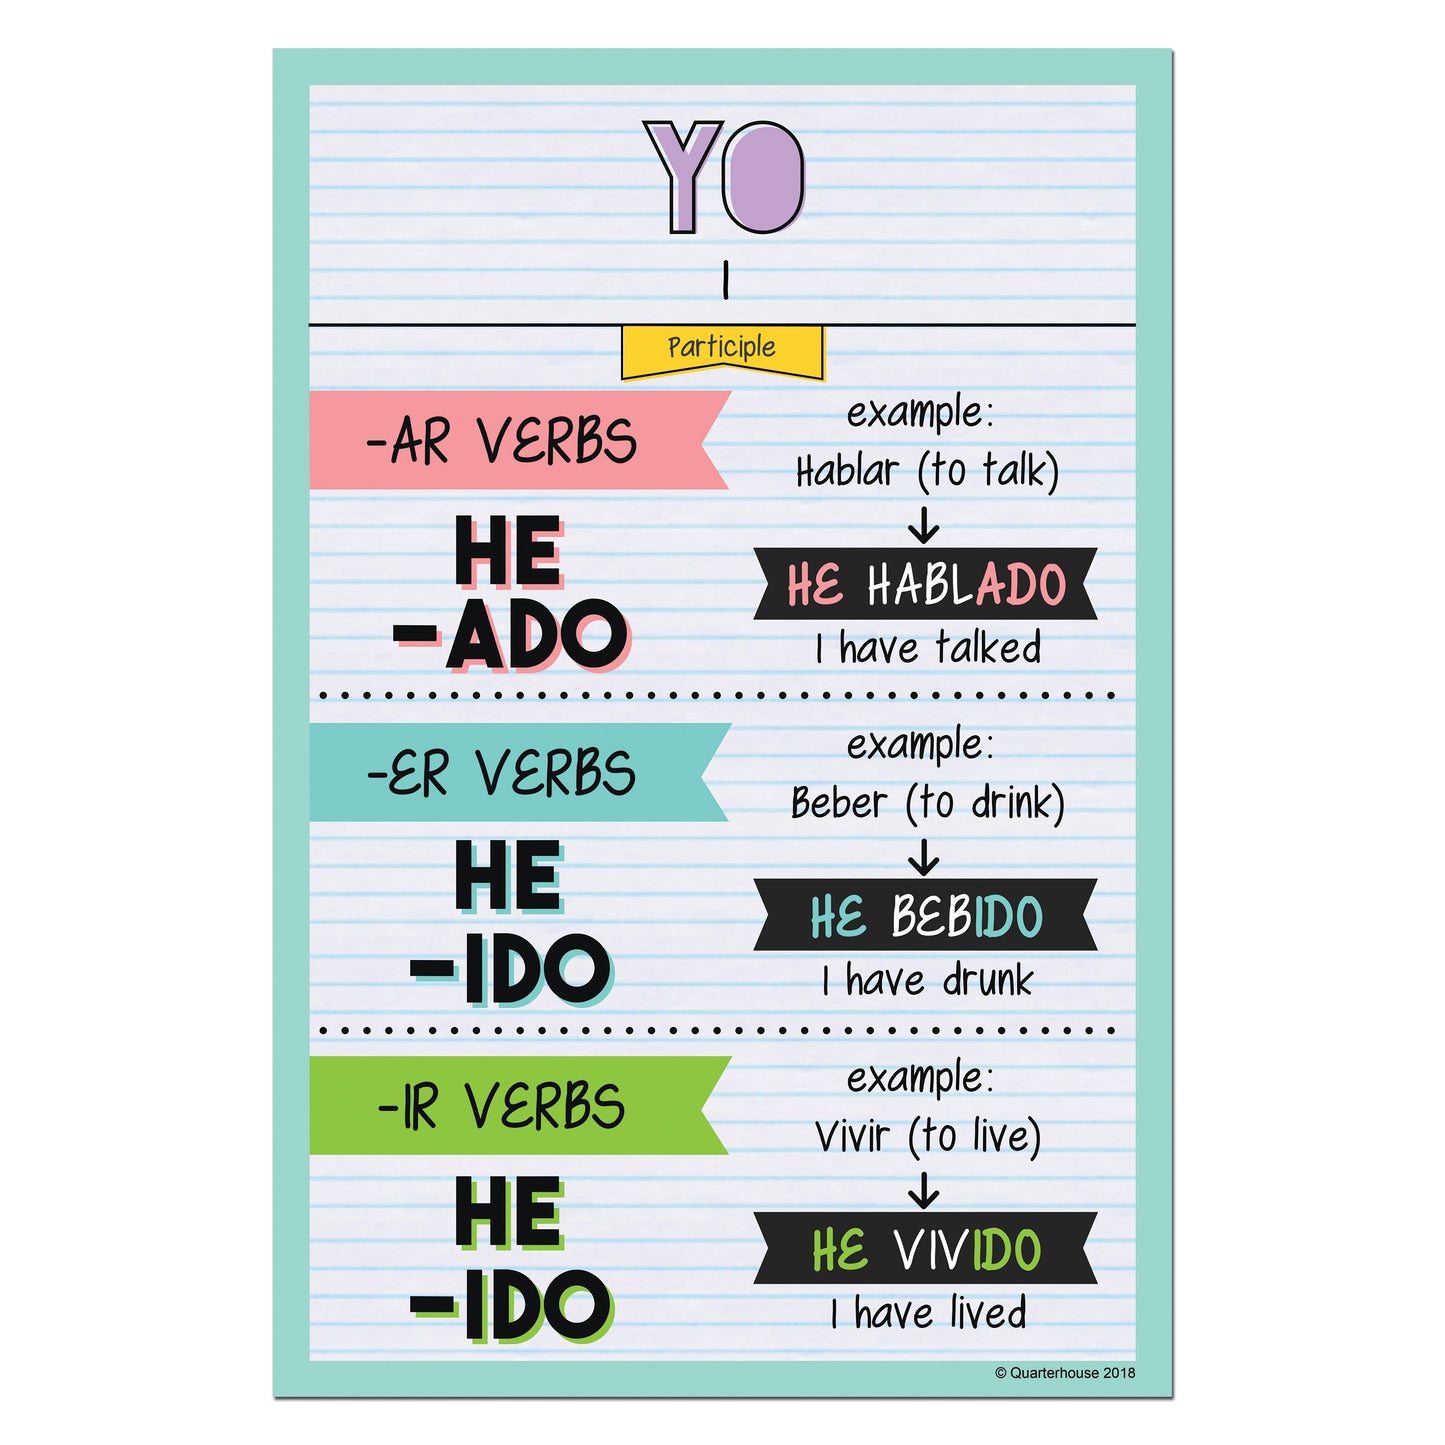 Quarterhouse Yo - Participle Spanish Verb Conjugation Poster, Spanish and ESL Classroom Materials for Teachers